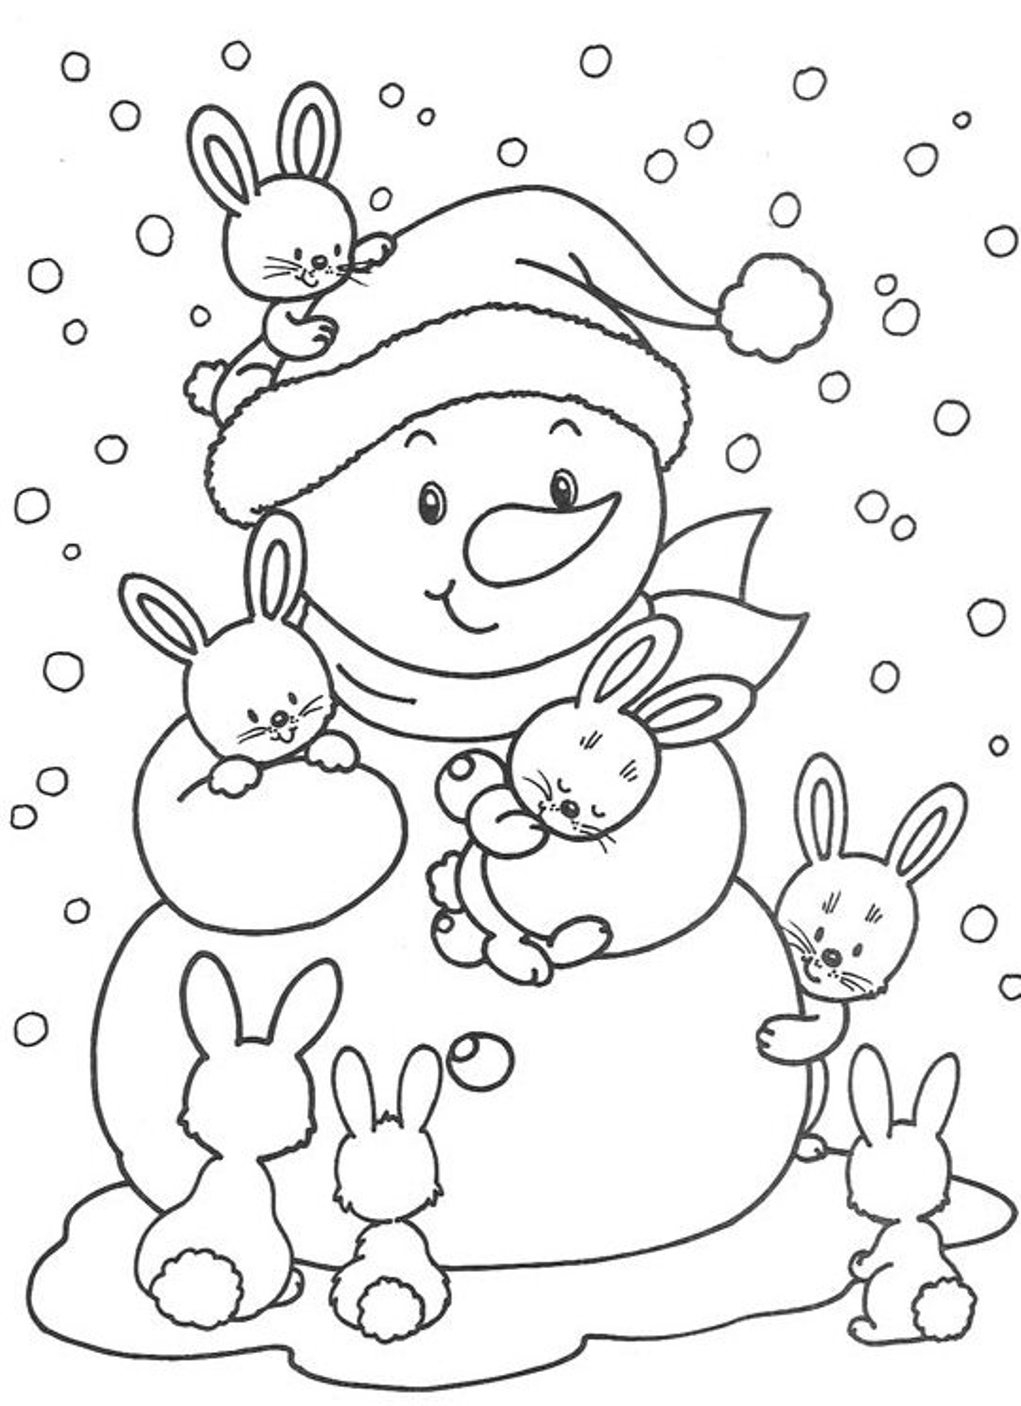 Disney Princess Winter Coloring Pages at GetColorings.com | Free